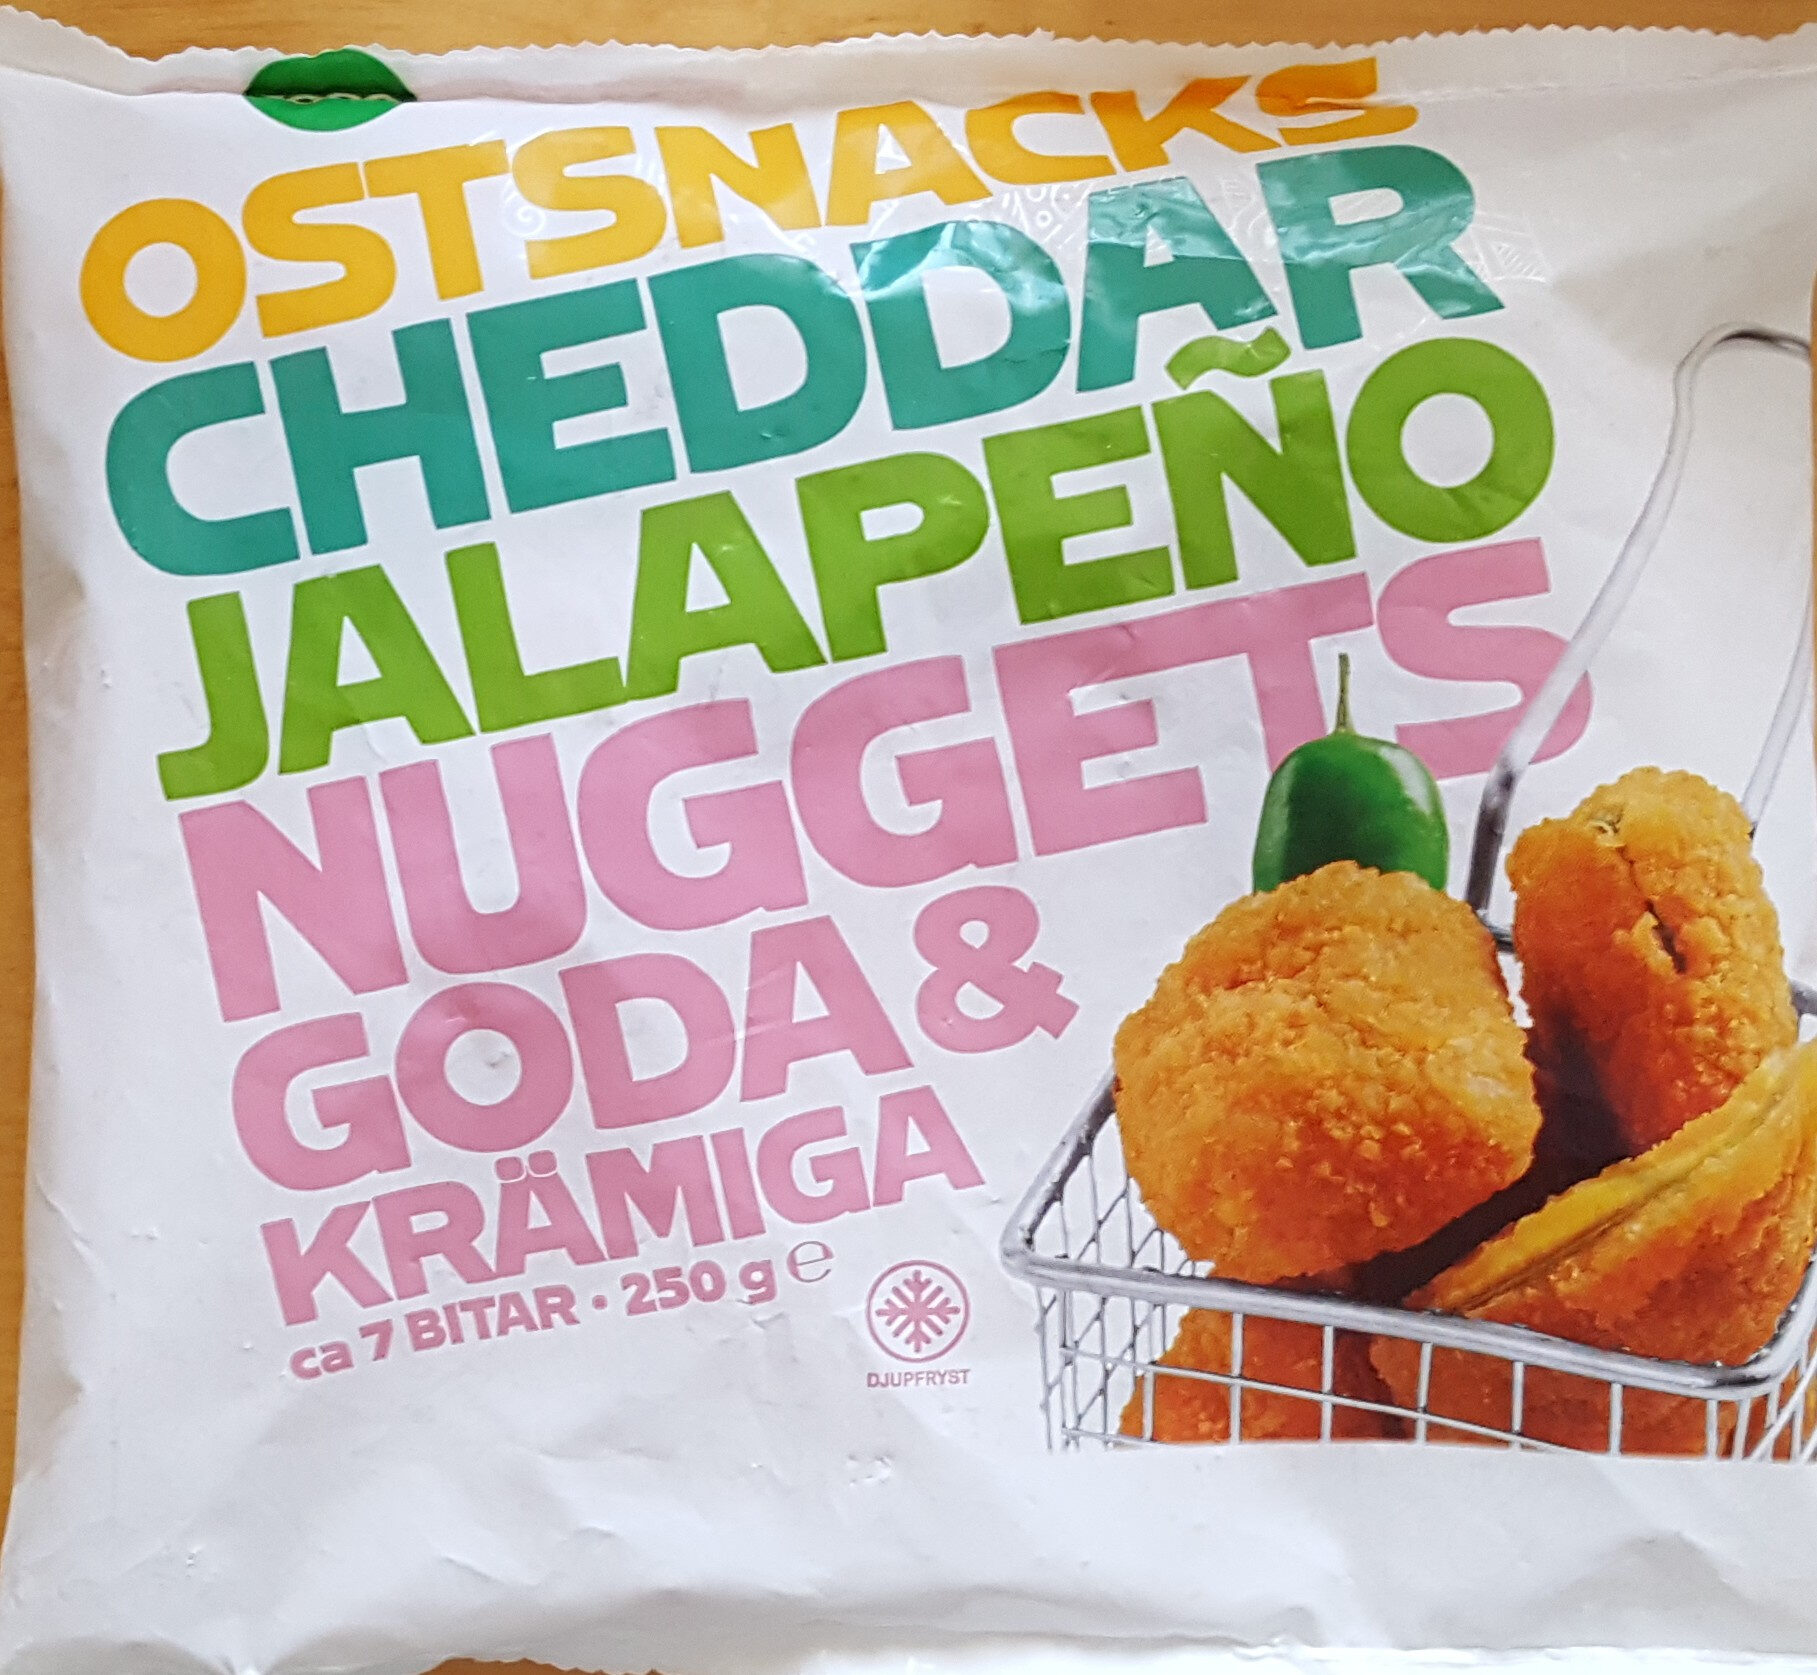 Ostsnacks Cheddar jalapeño nuggets - Goda & krämiga - Produkt - sv